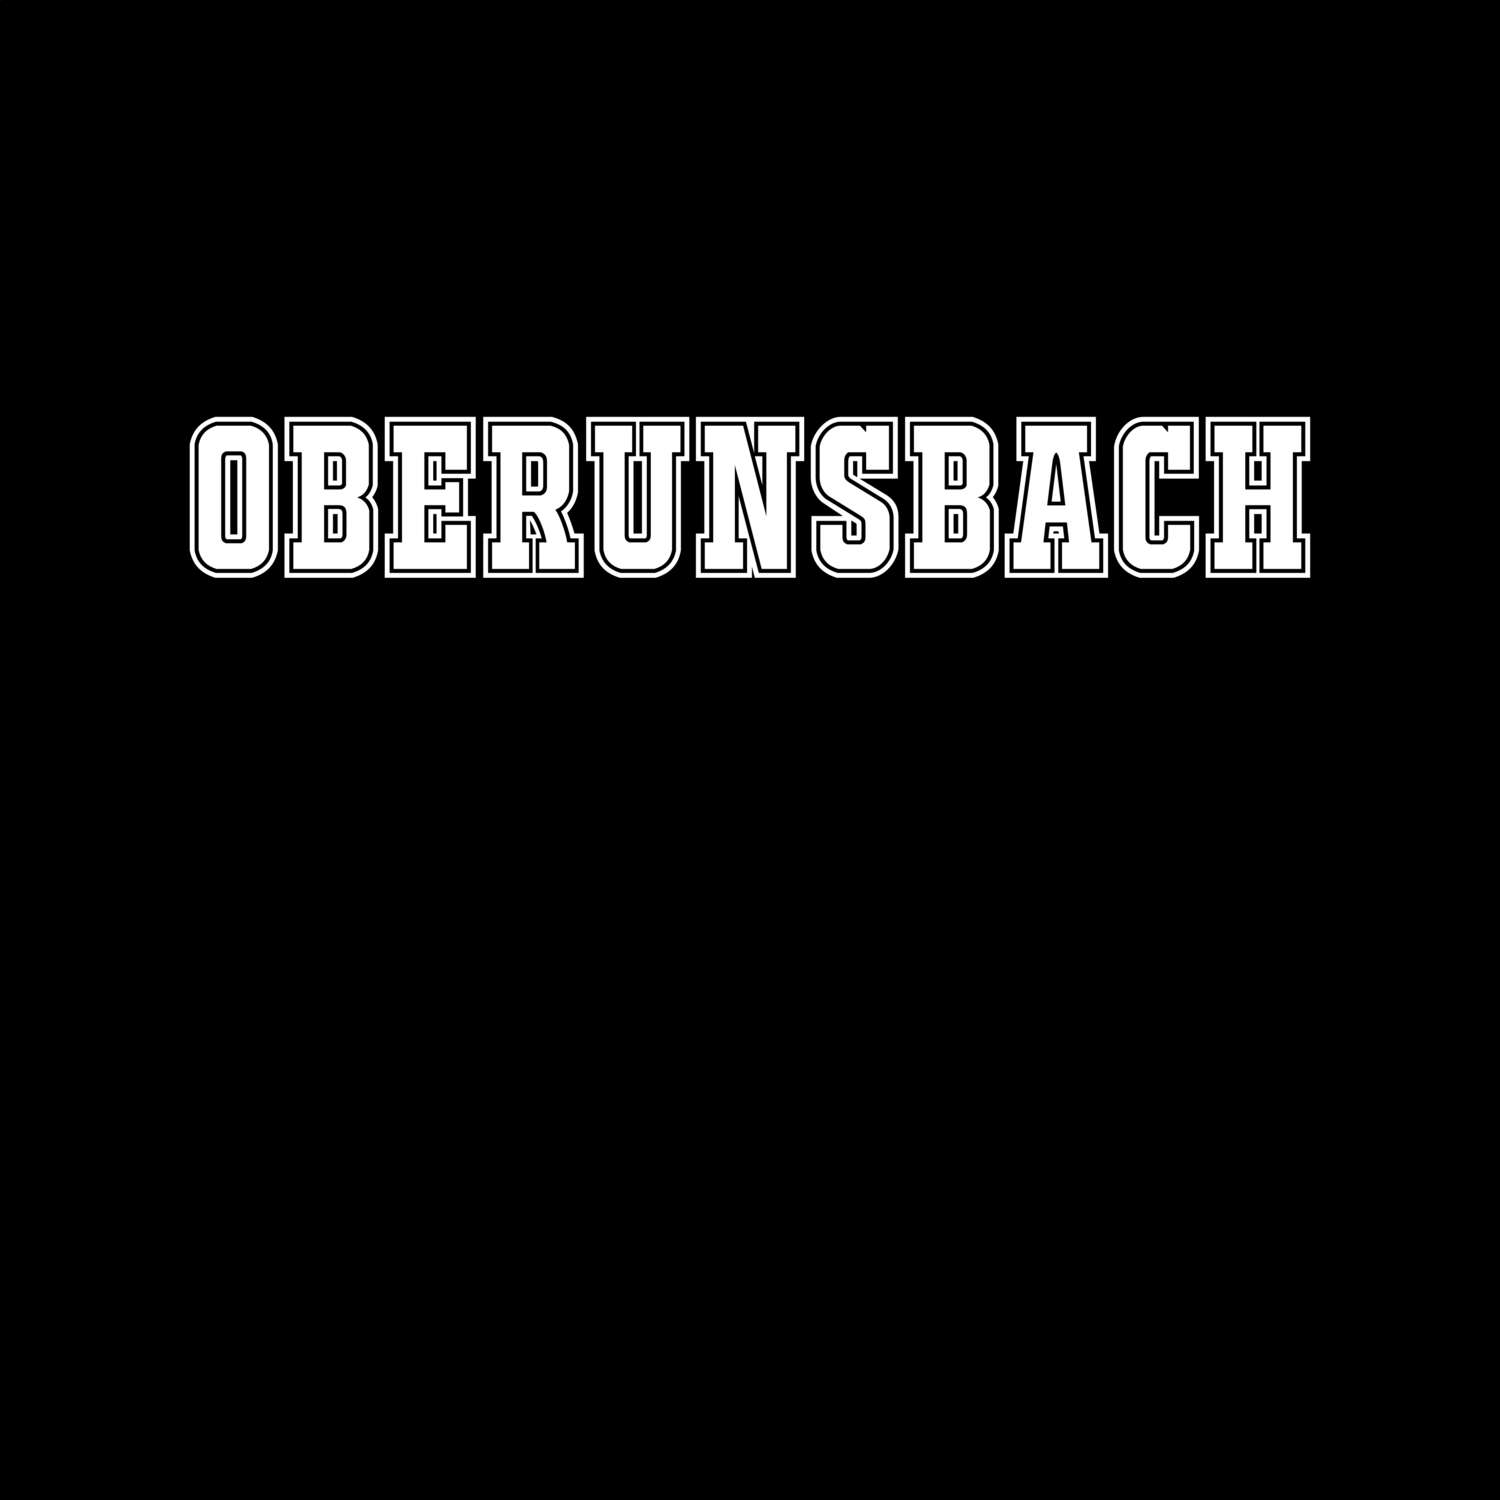 Oberunsbach T-Shirt »Classic«